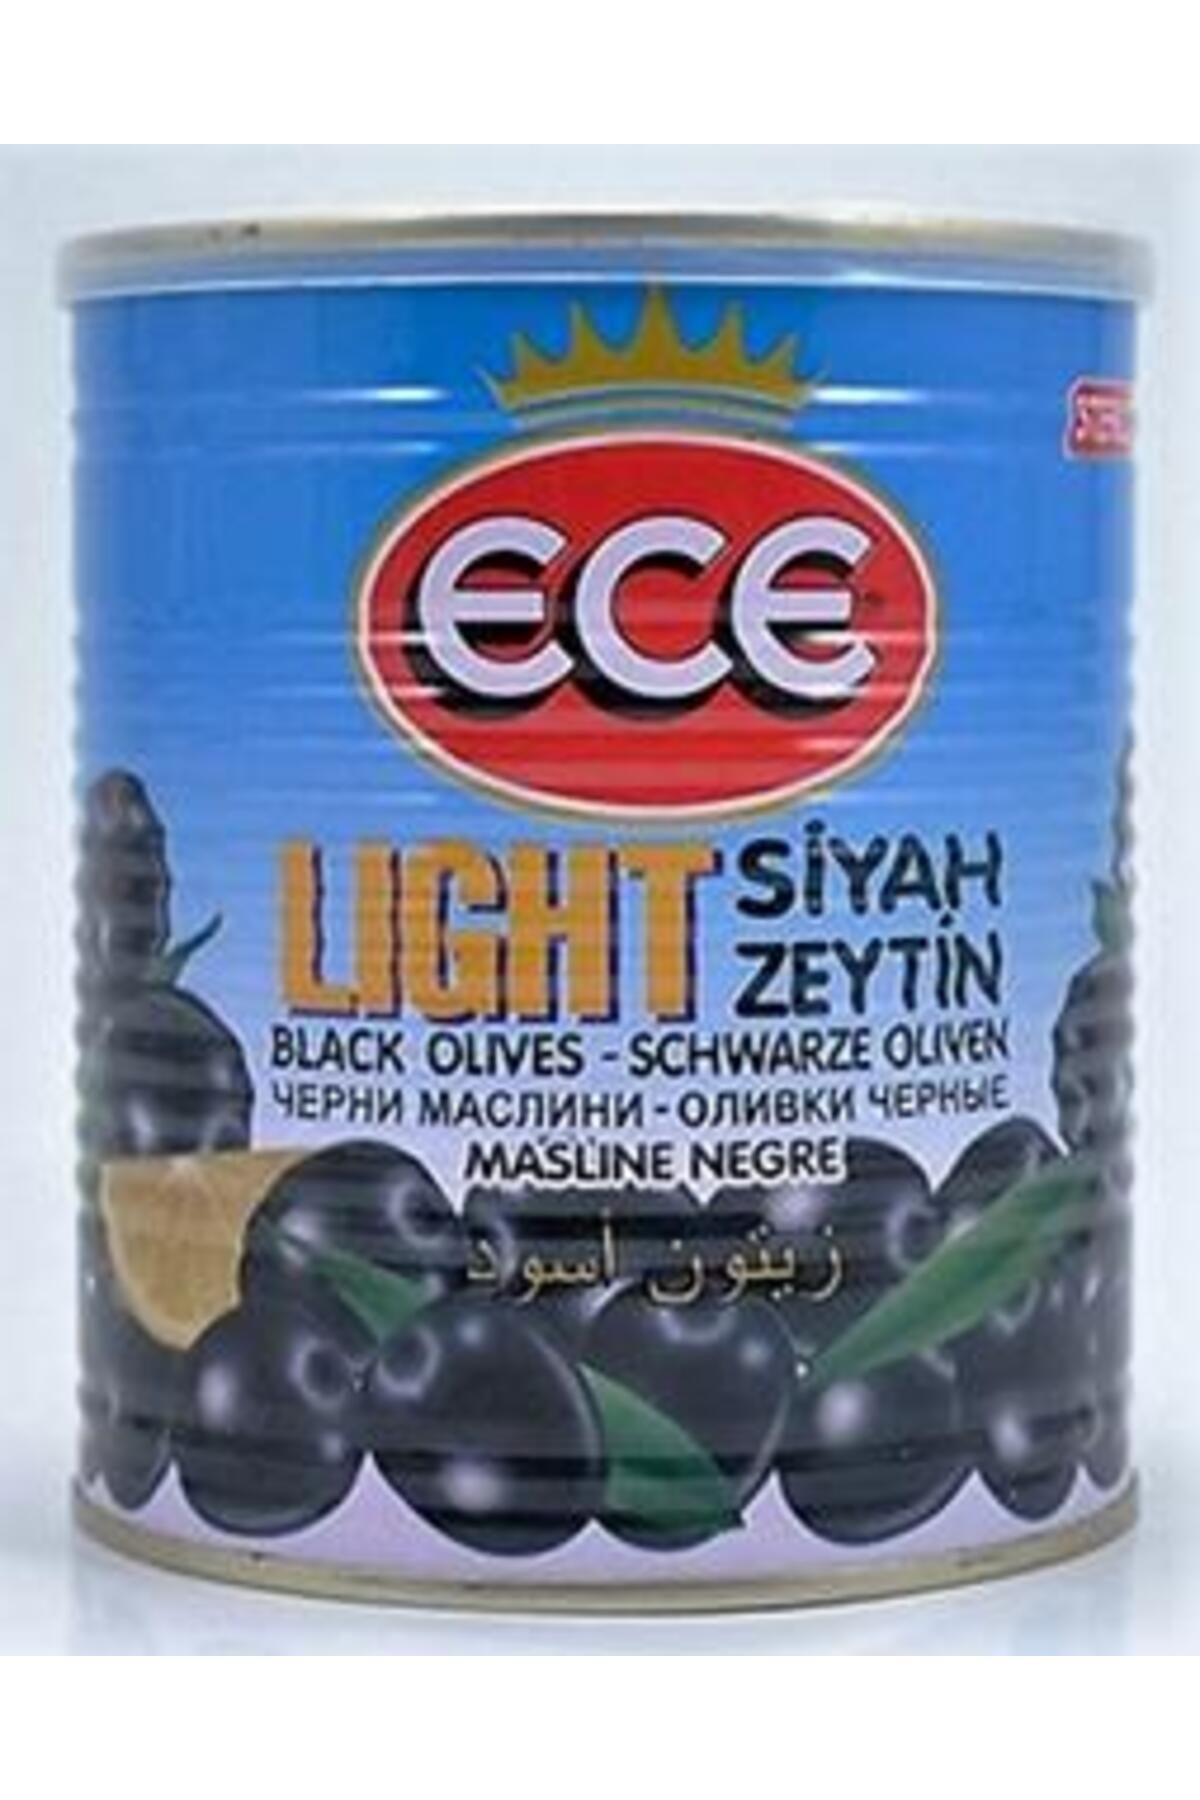 Ece Light Siyah Zeytin 400 Gr. Tnk. (6'LI)